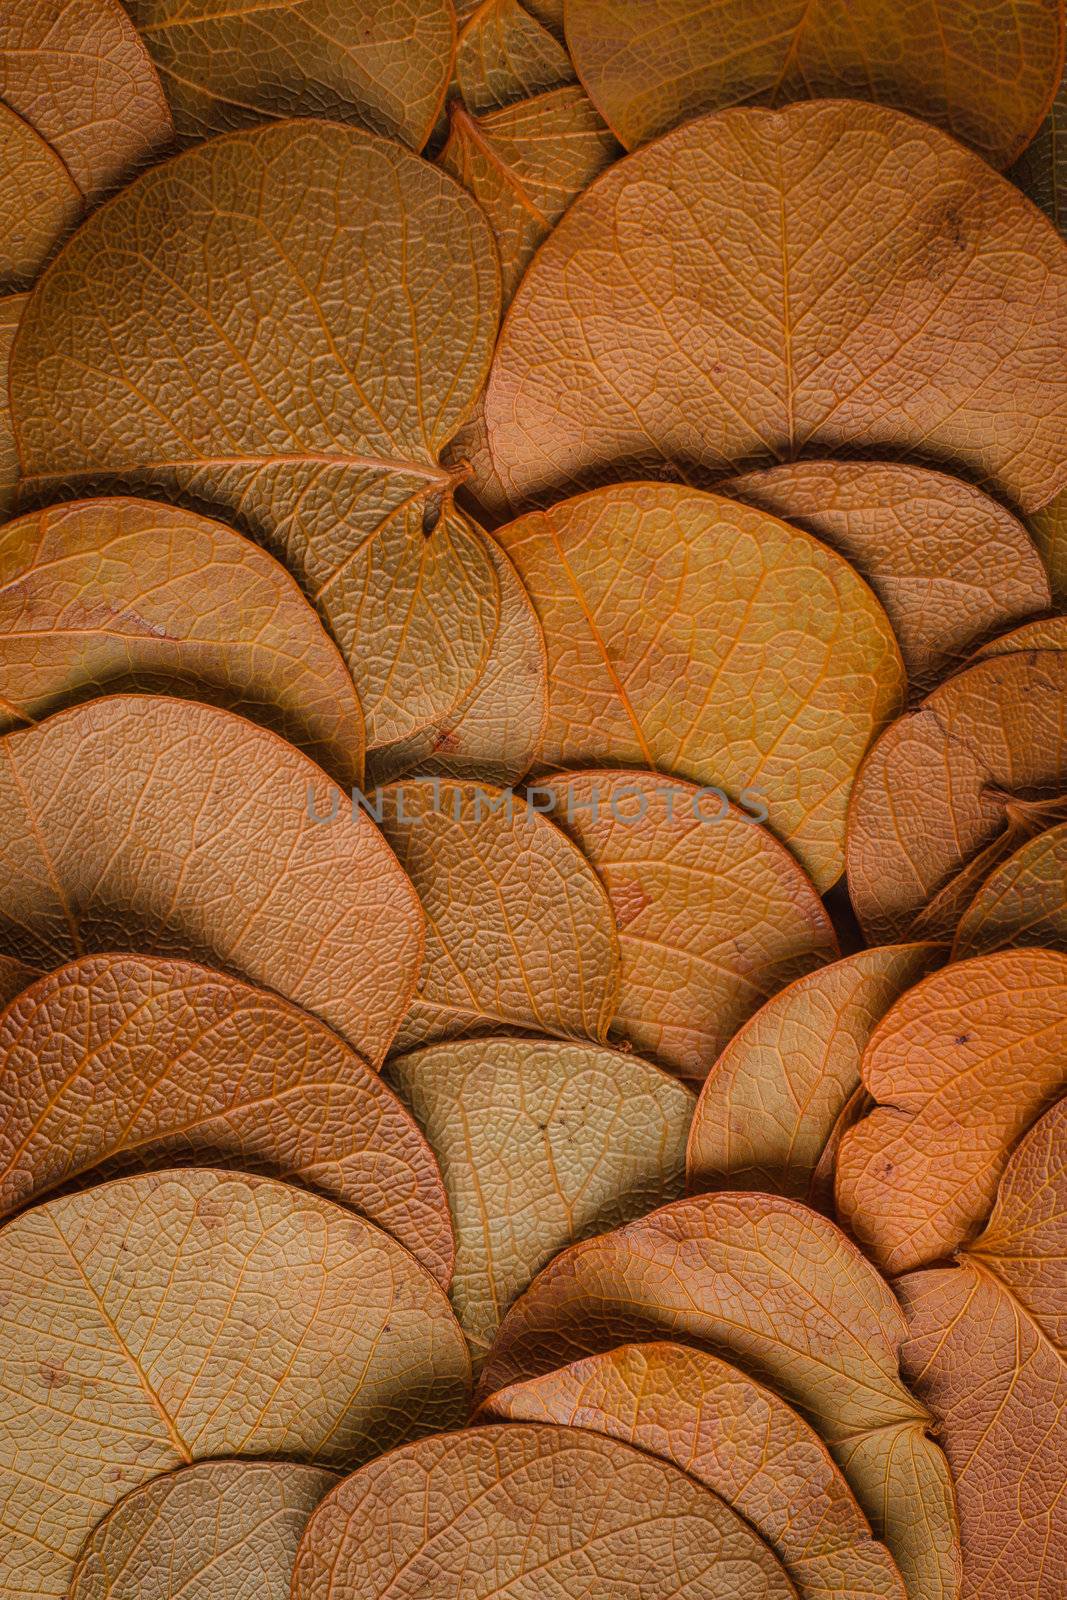 Autumn foliage texture background close up.